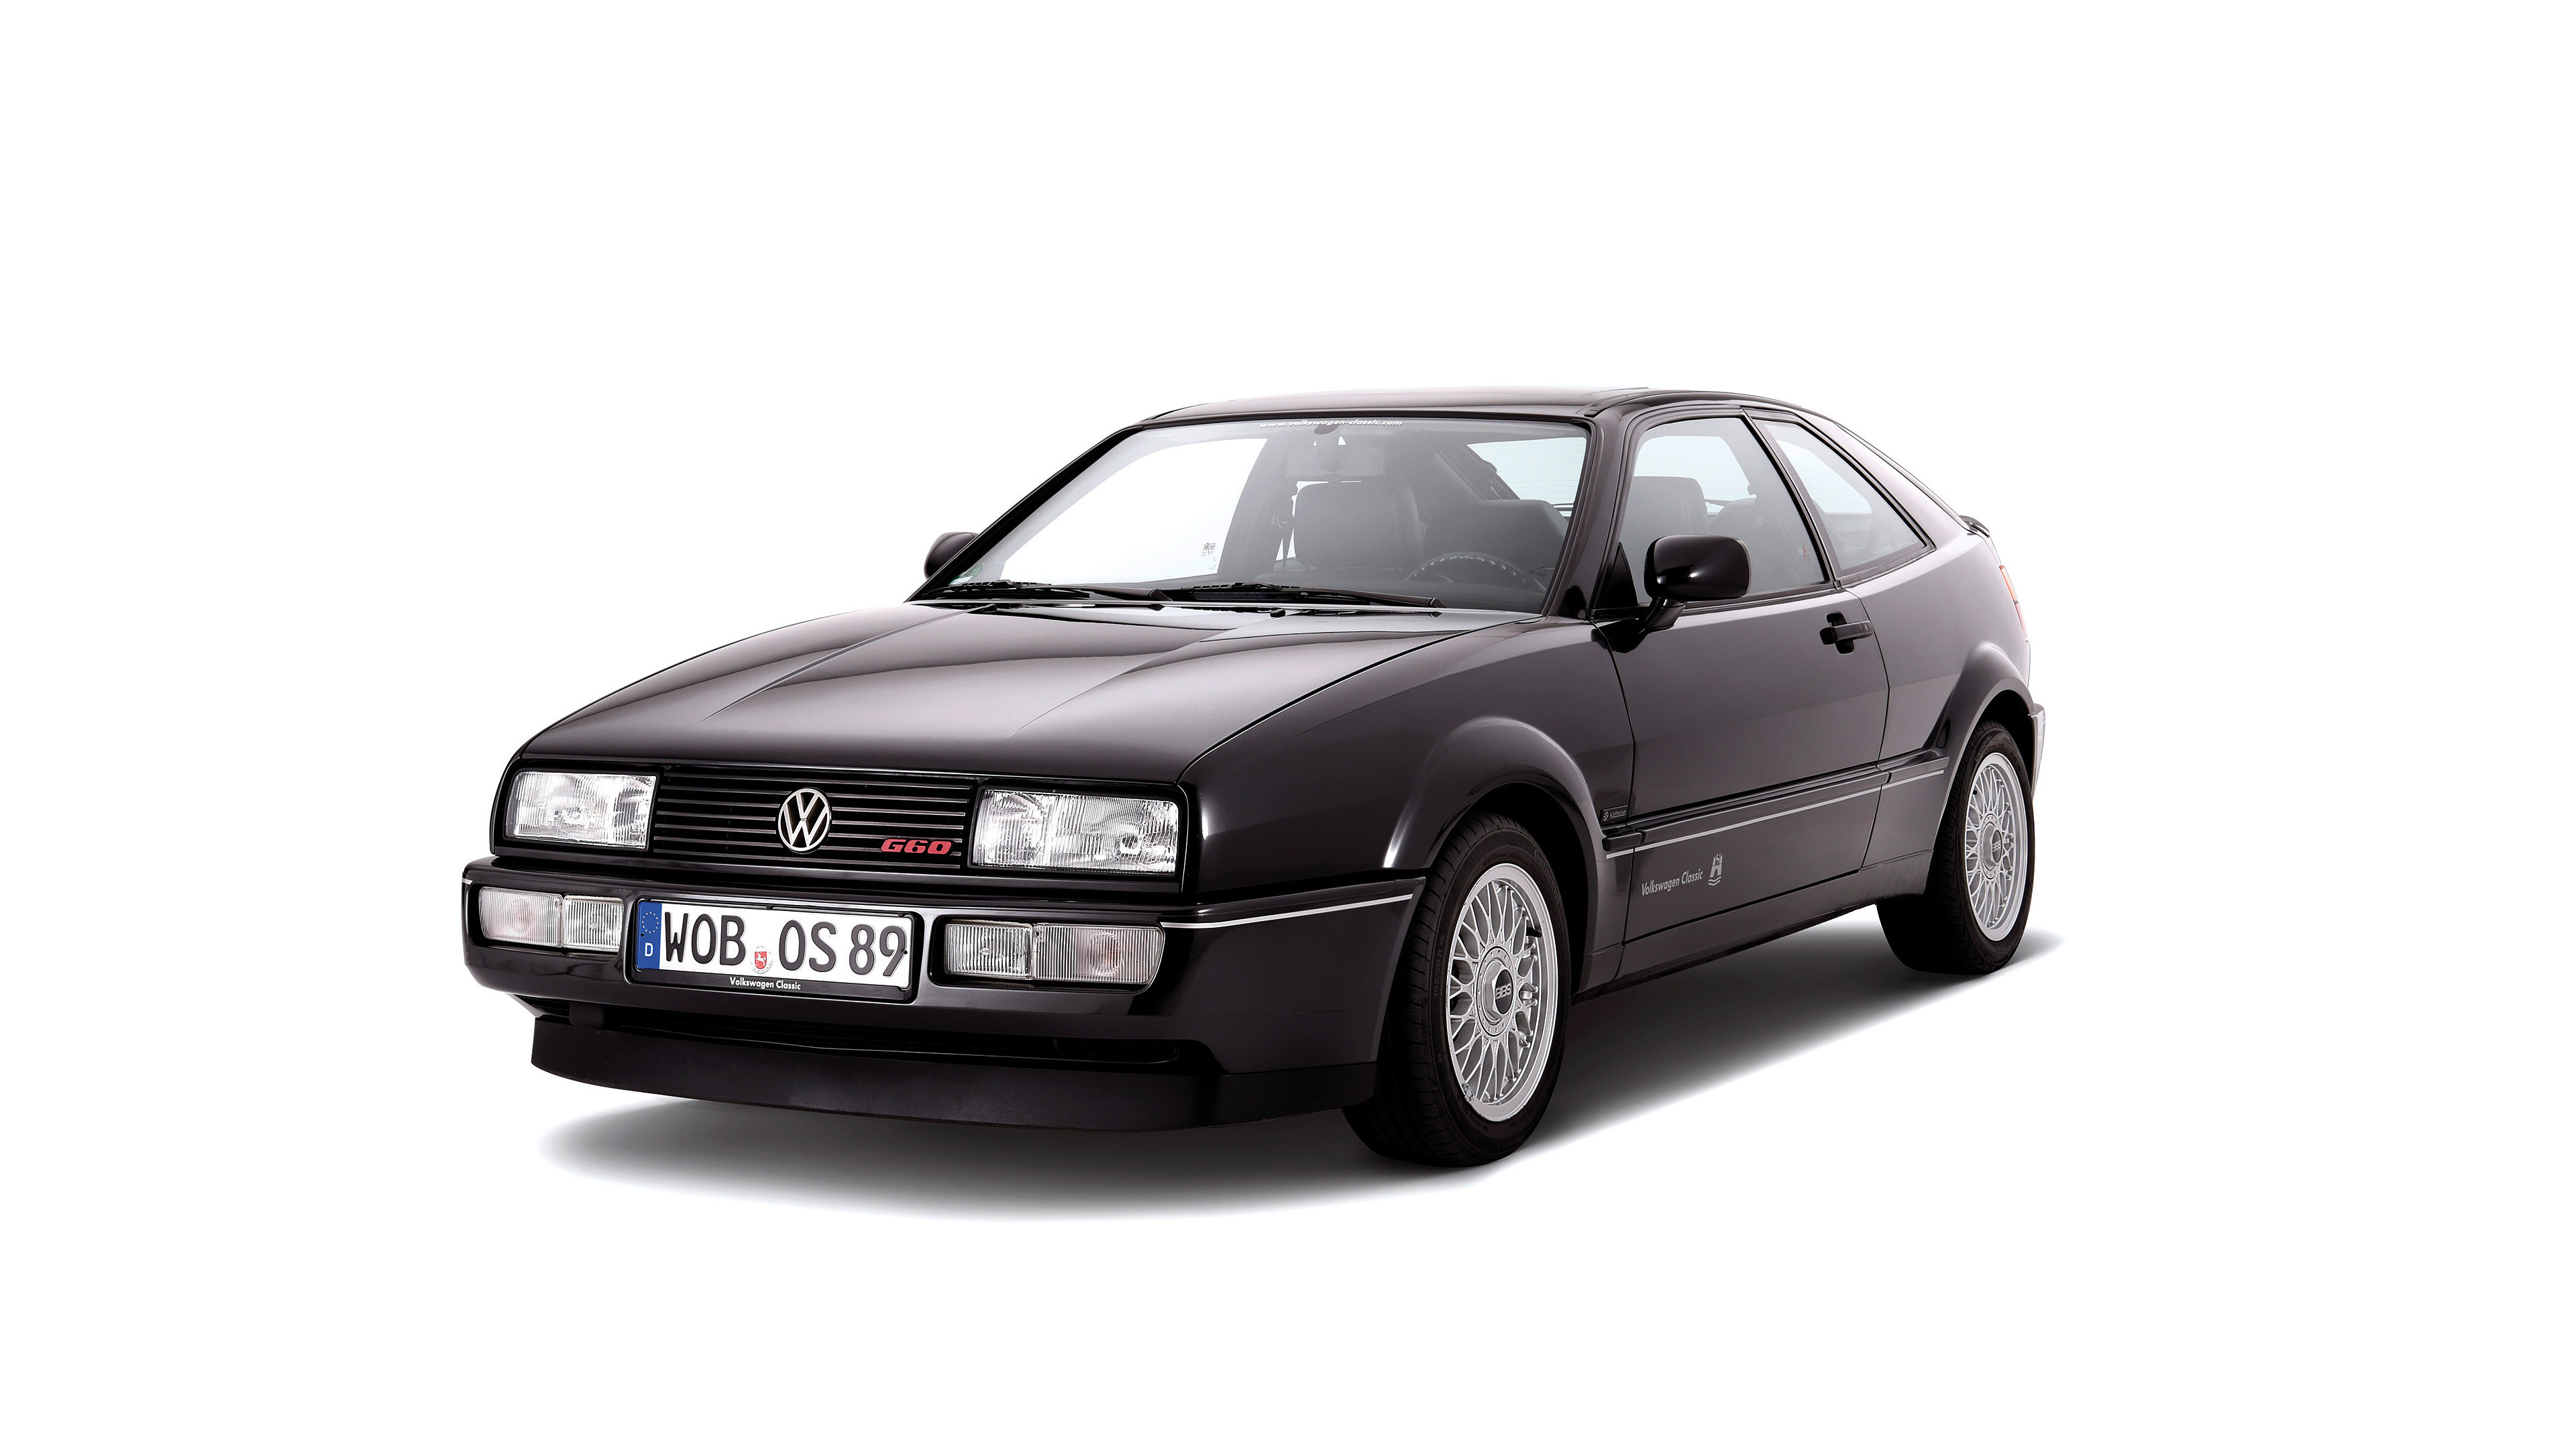  1988 Volkswagen Corrado G60 Wallpaper.